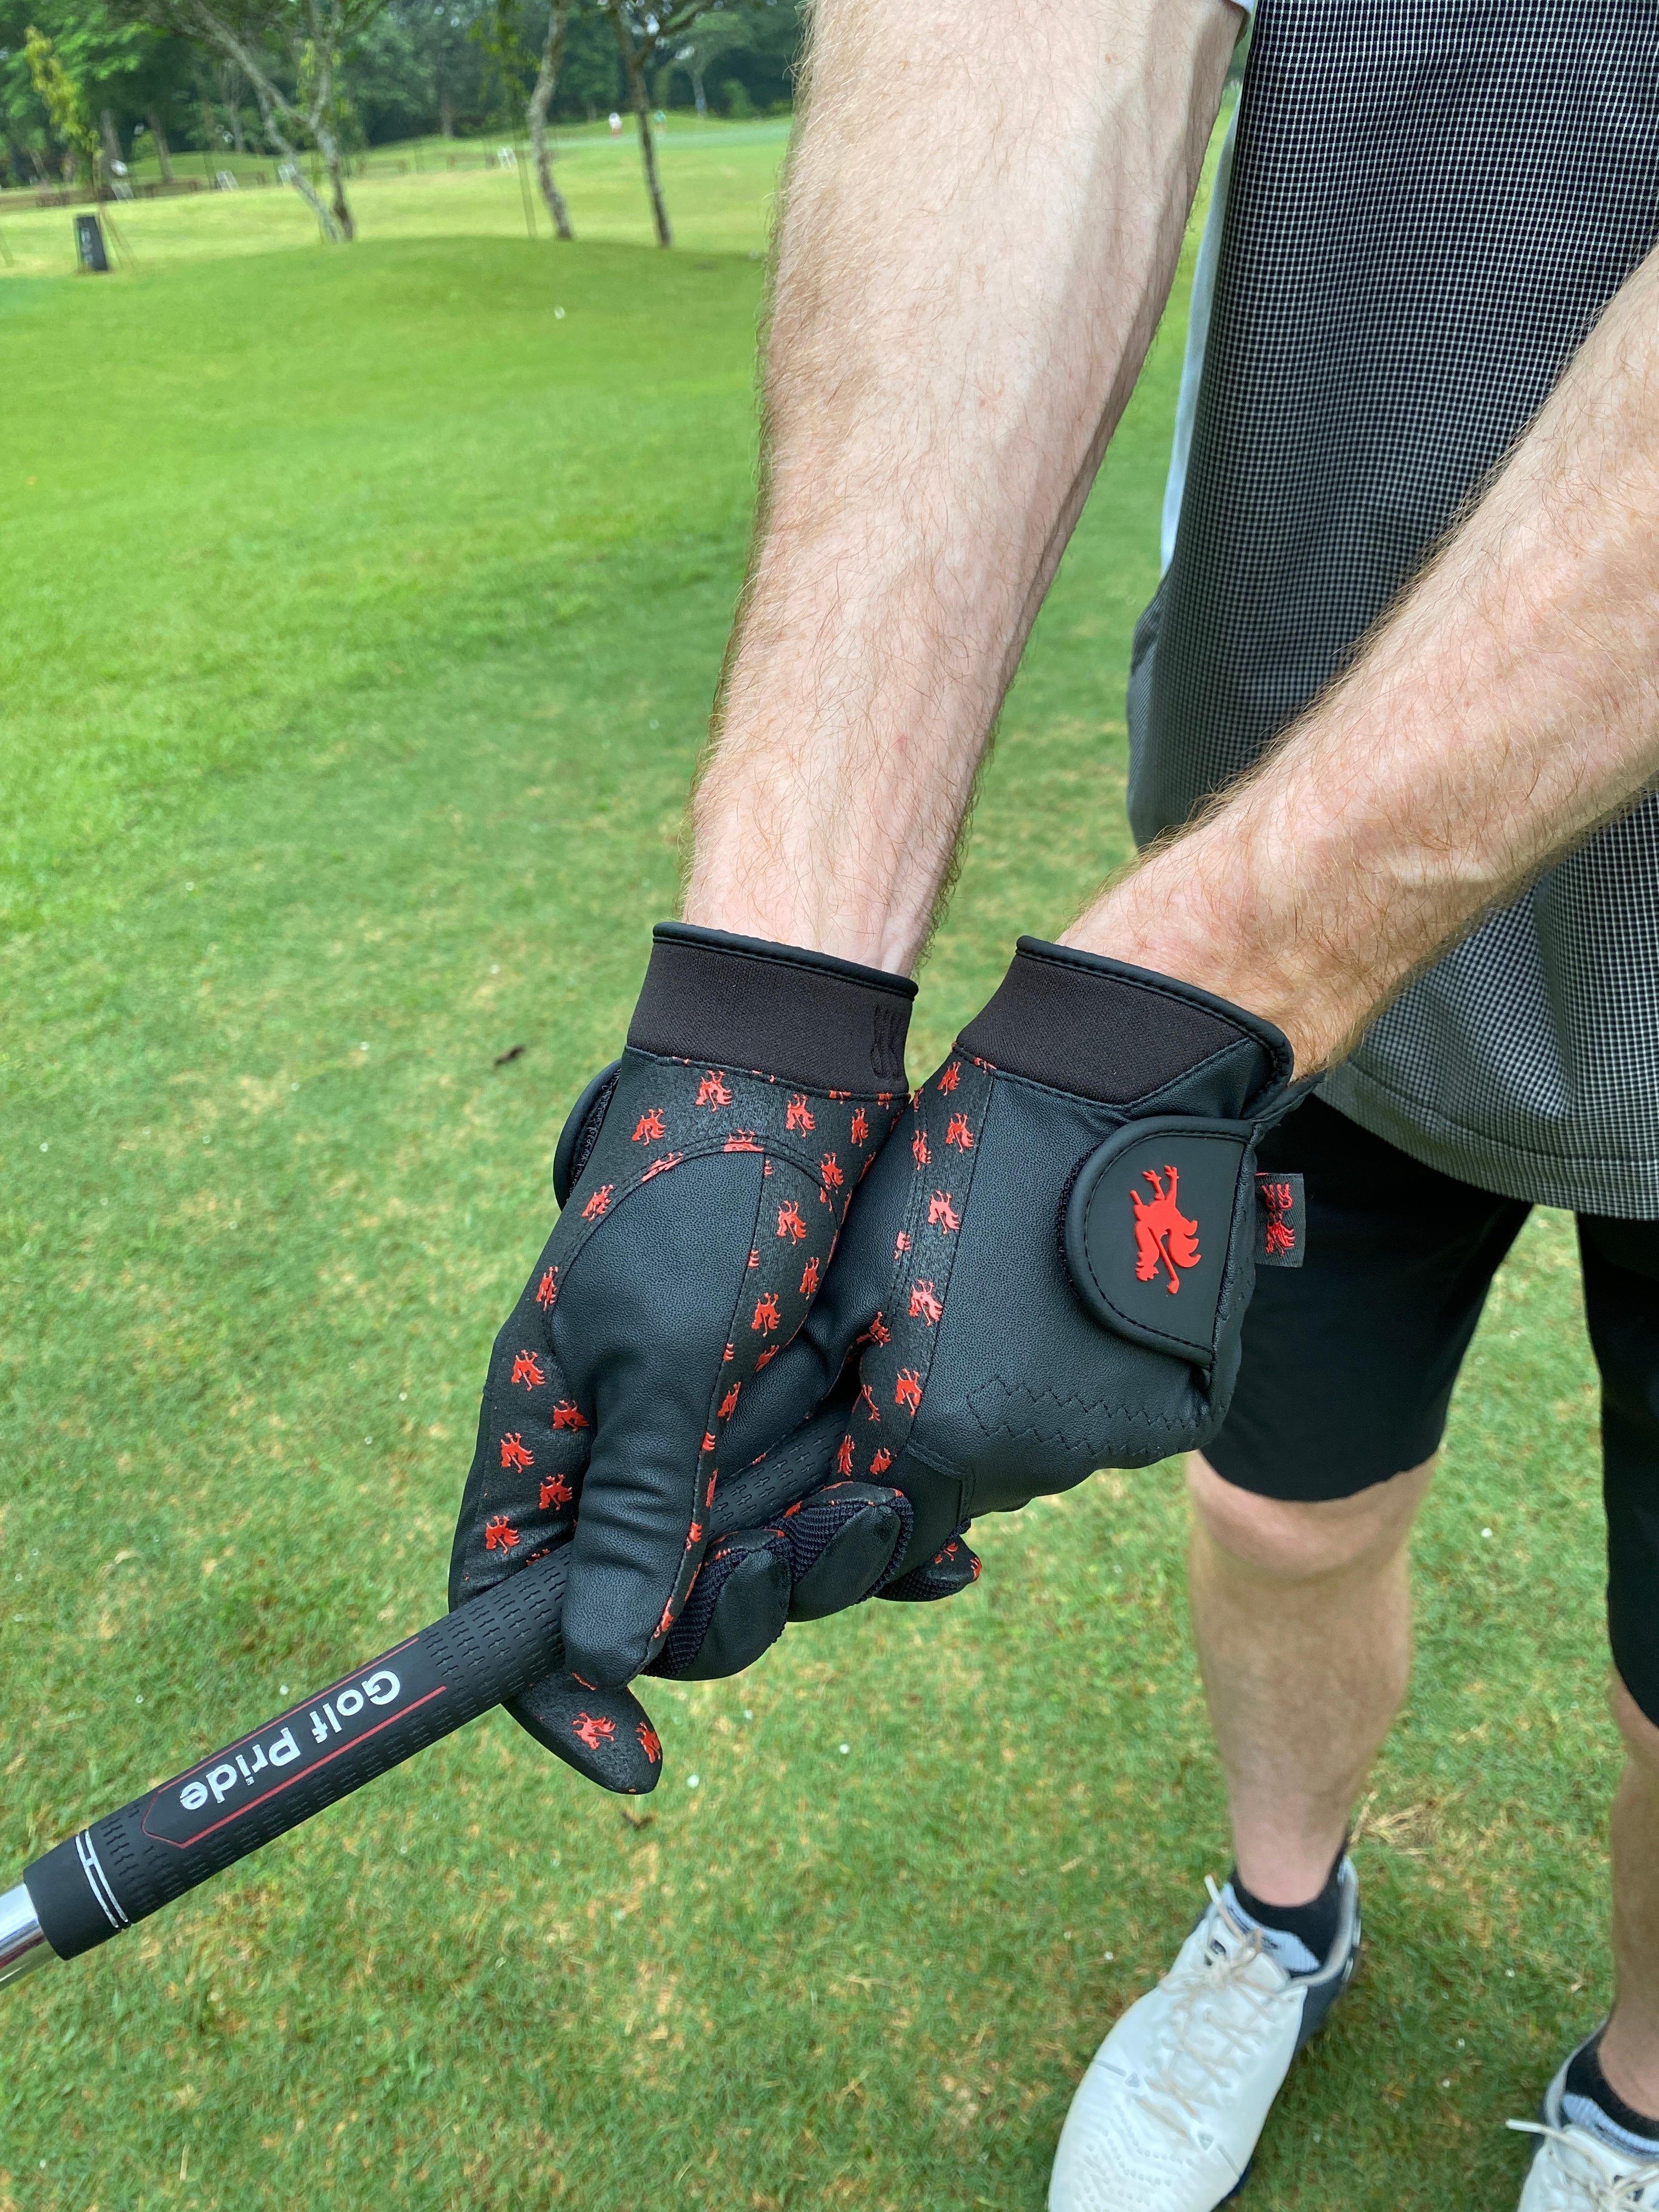 Rain Rooster golf glove in man hand